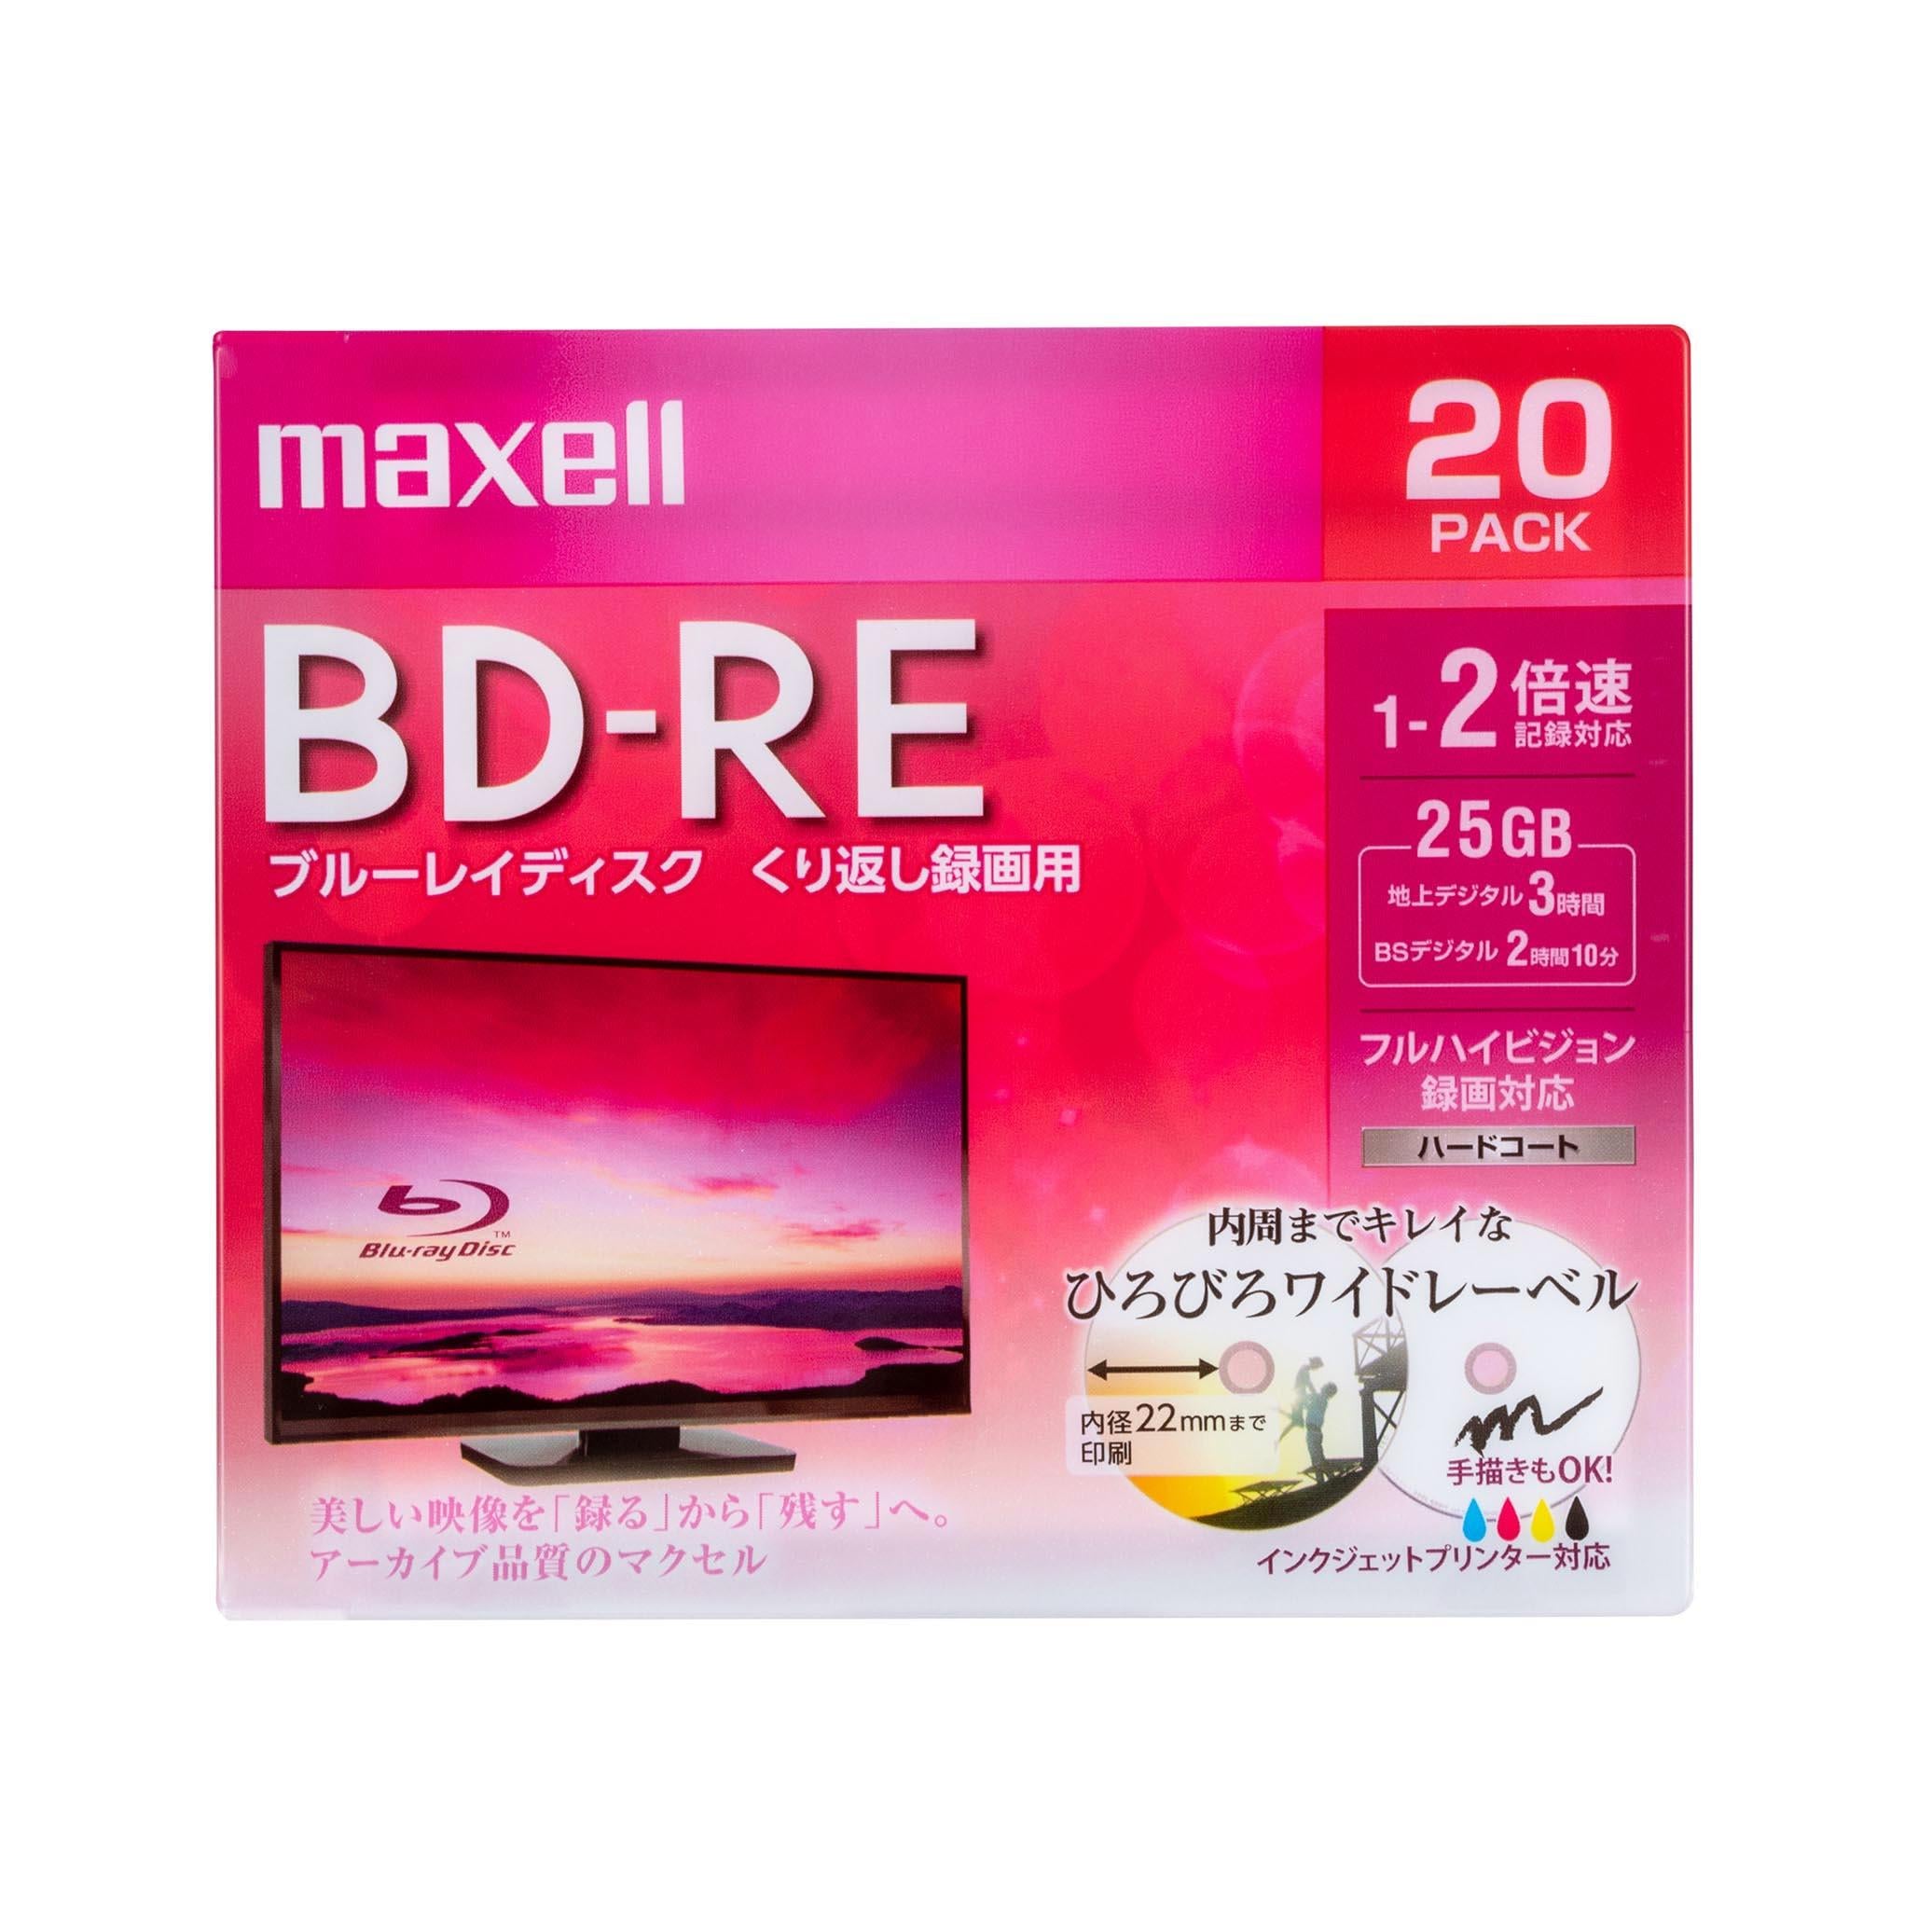 maxell 録画用BD-RE DL 2層 くり返し録画用 地上デジタル360分 BS